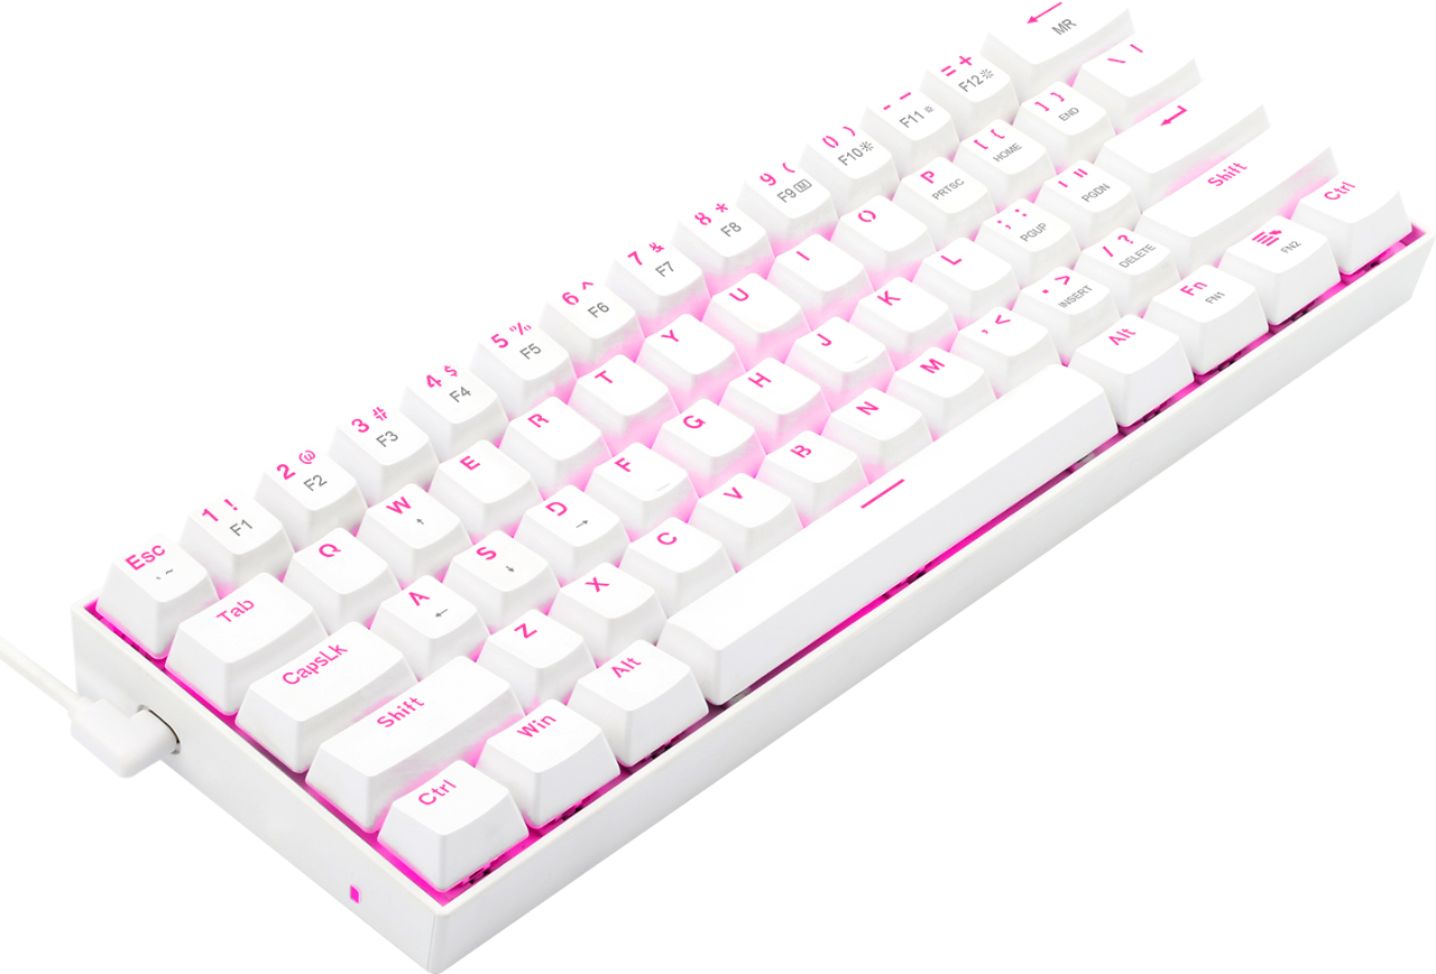 Razer Huntsman Mini 60% Gaming Keyboard + PBT Keycap + Coiled Cable Upgrade  Set Bundle: Mercury White/Linear Optical - Quartz Pink